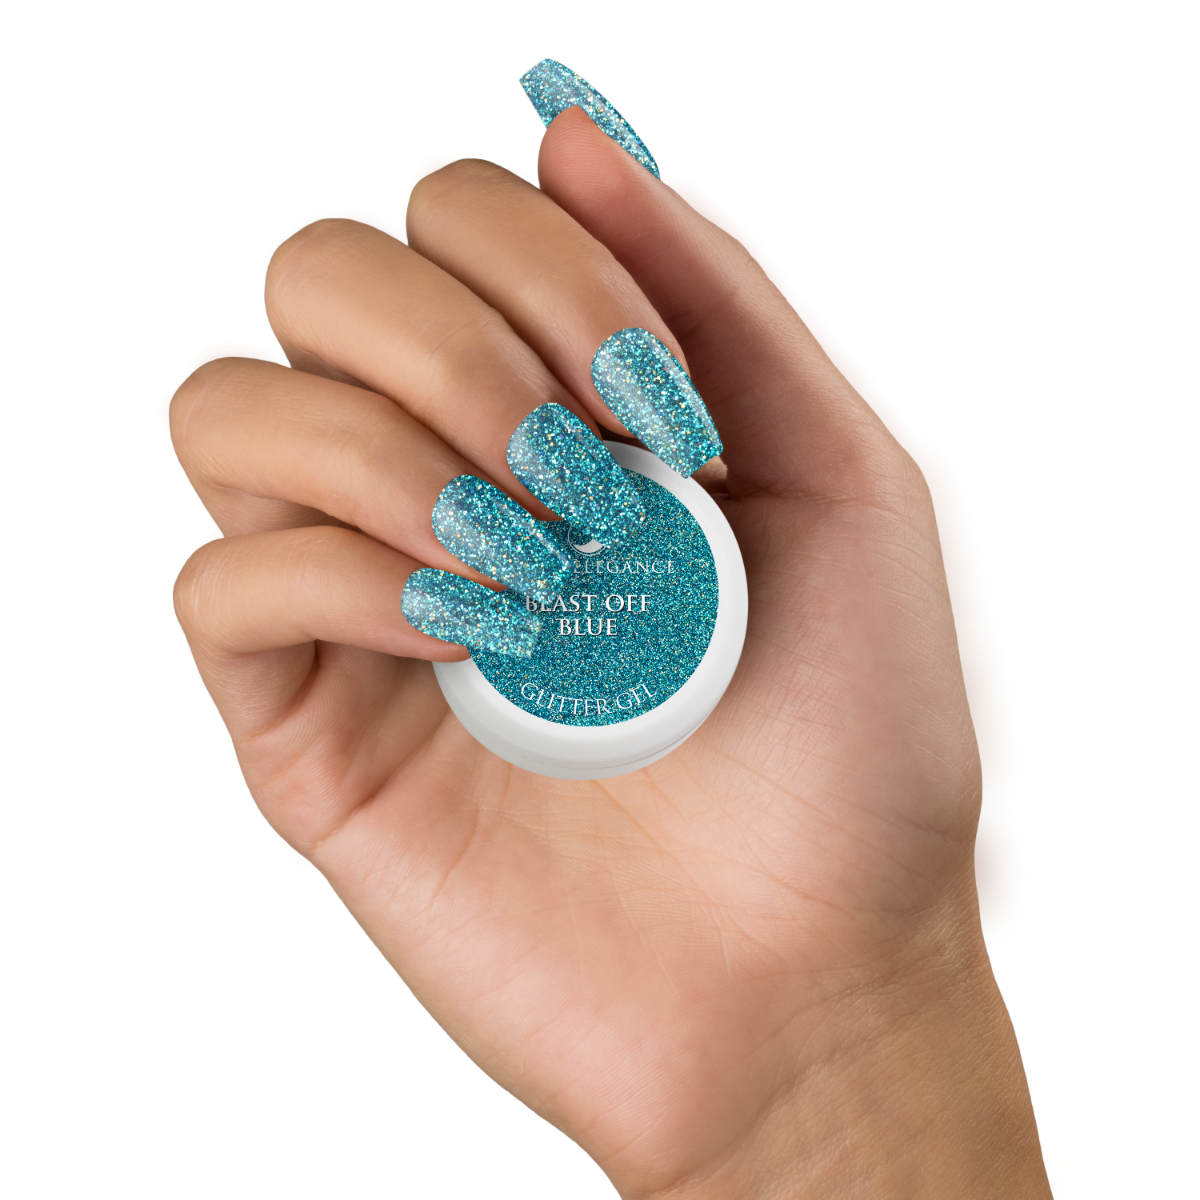 Light Elegance Glitter Gel - Blast Off Blue :: New Packaging - Creata Beauty - Professional Beauty Products